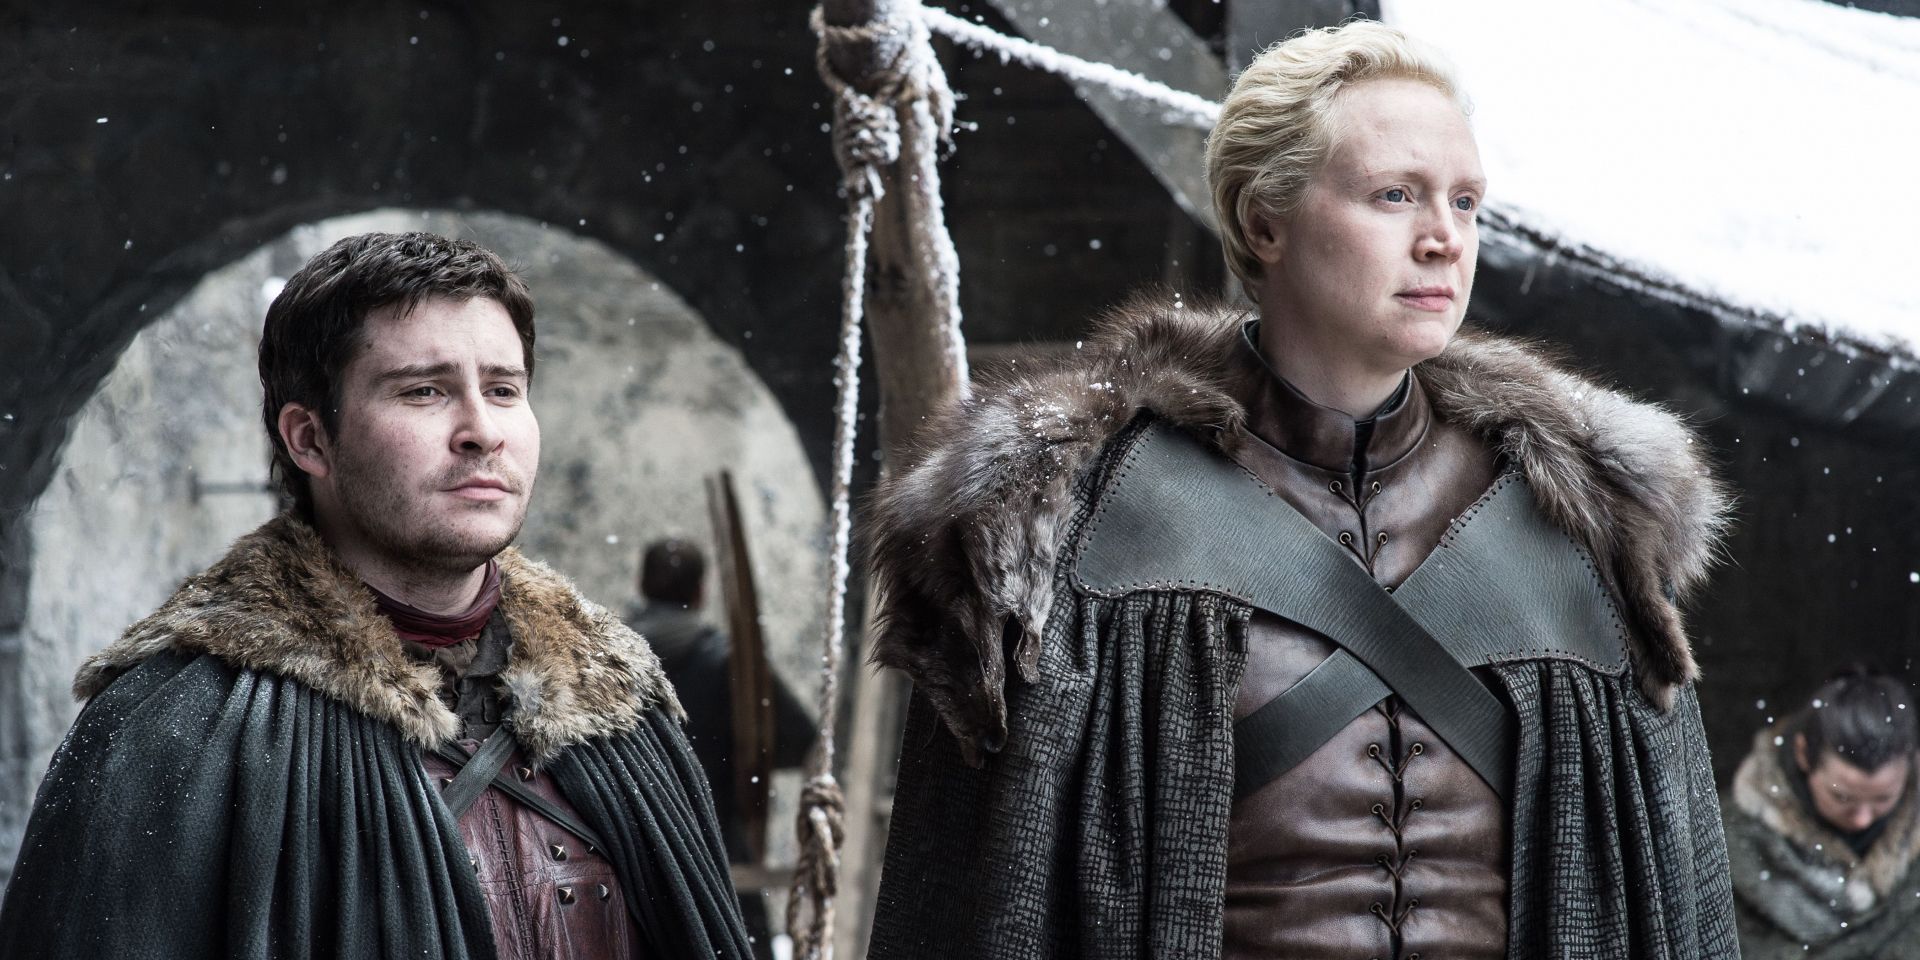 Podrick Payne accompanying Brienne of Tarth in Game of Thrones